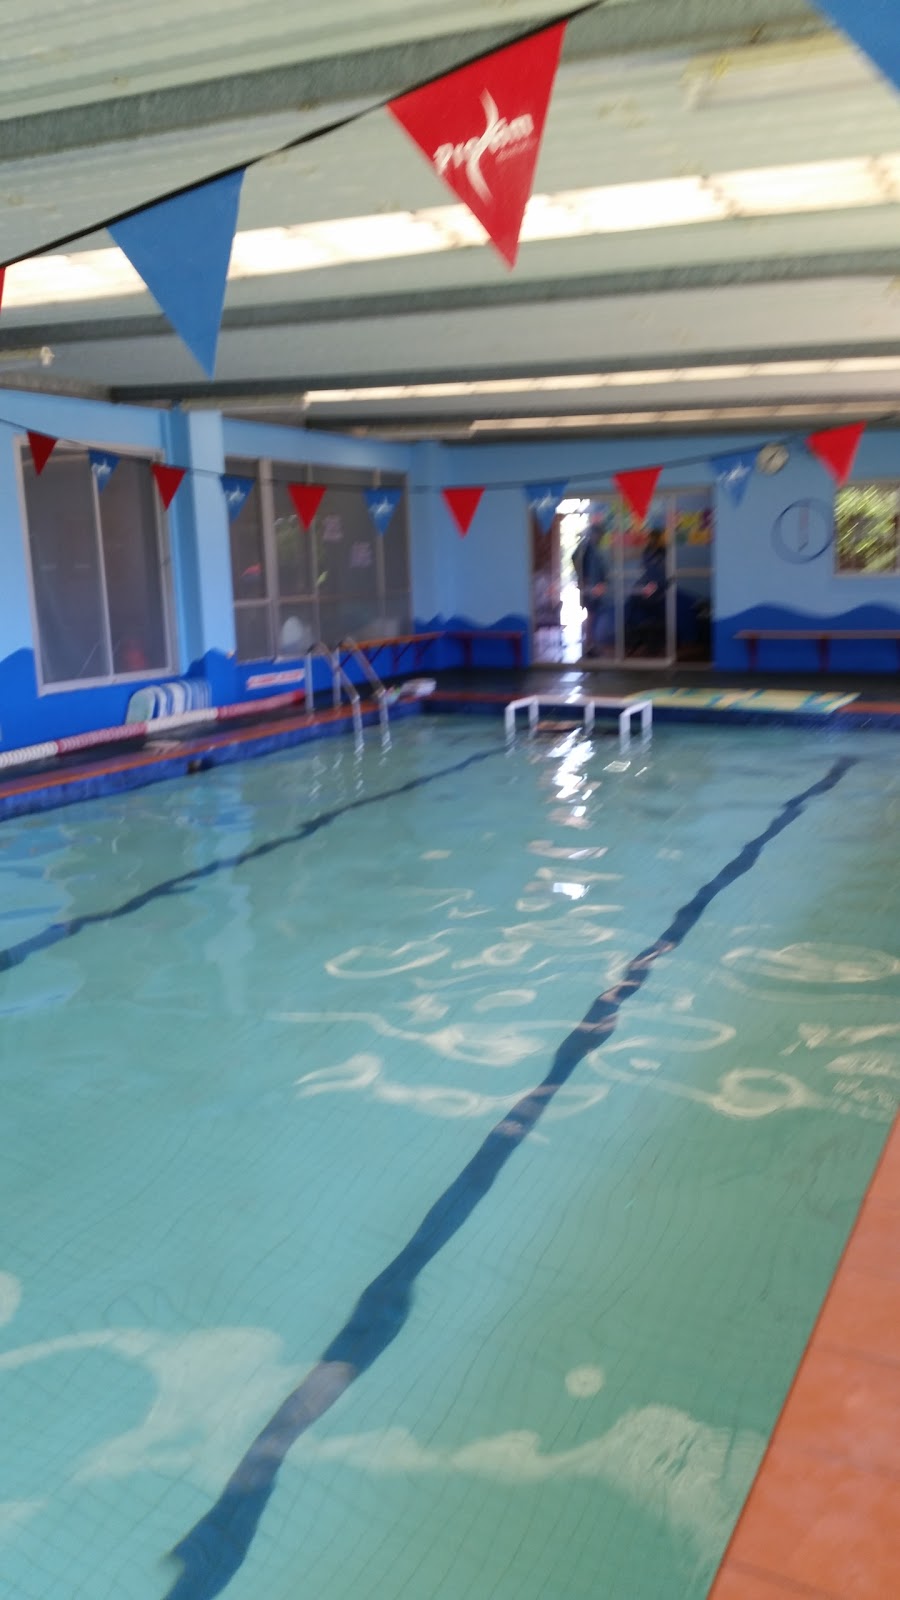 Marlin Swim School VIc |  | 130 Western Ave, Westmeadows VIC 3049, Australia | 0393301064 OR +61 3 9330 1064